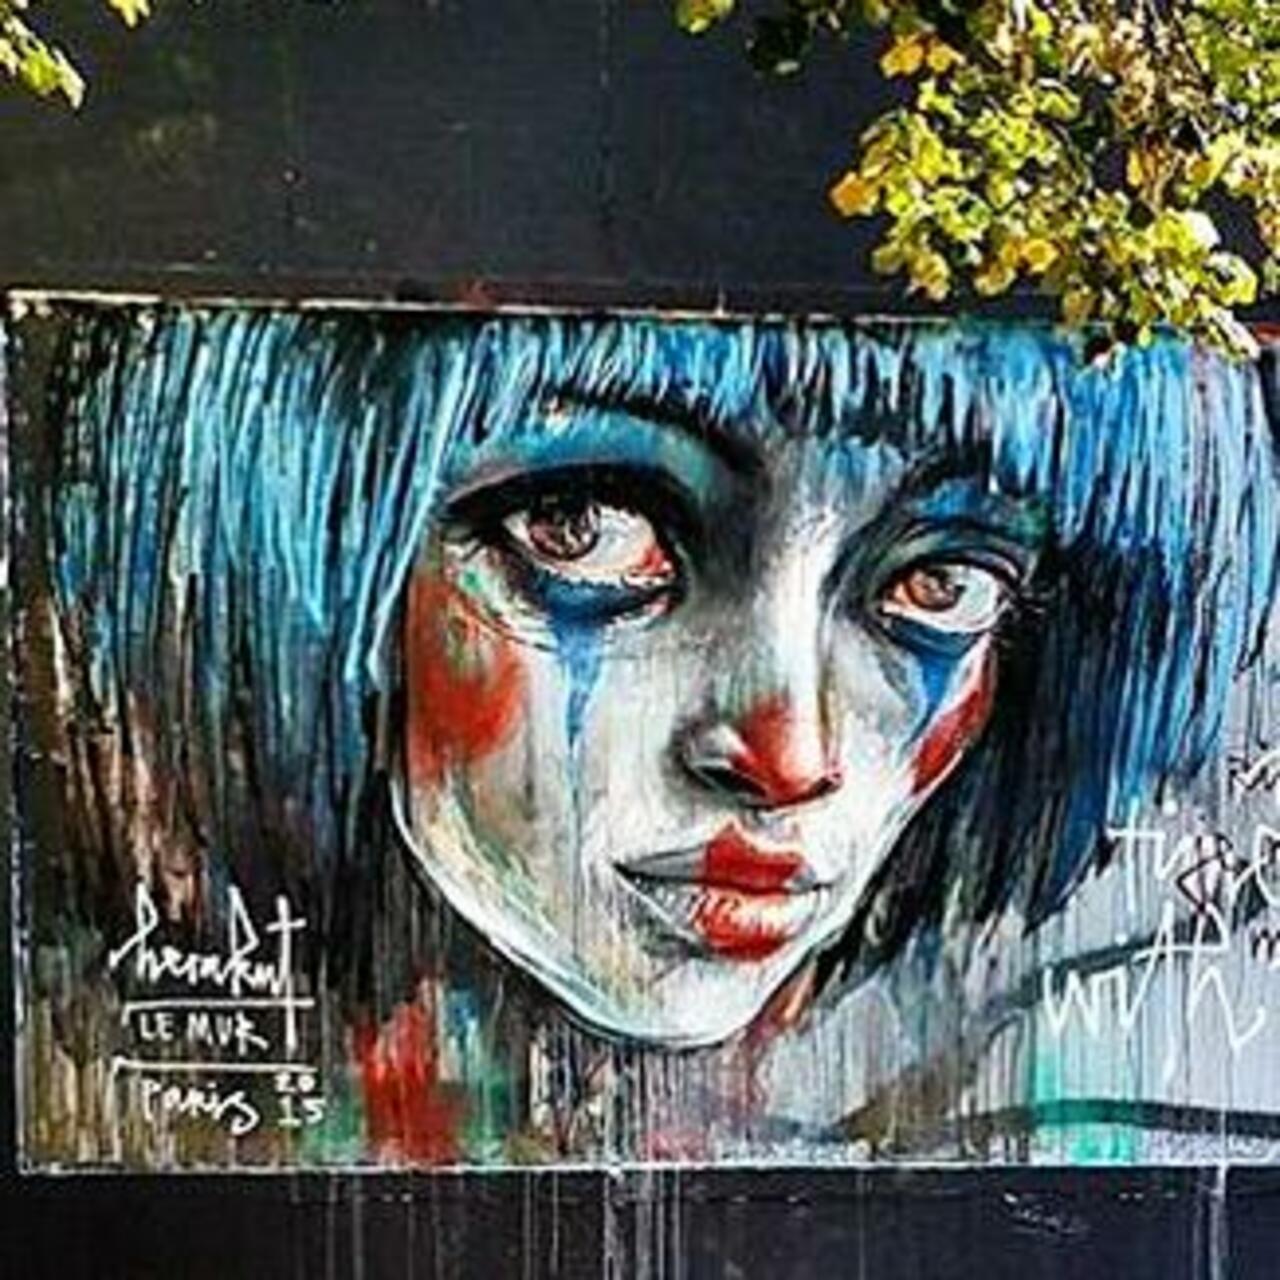 #Paris #graffiti photo by @jeanlucr http://ift.tt/1jvjbzn #StreetArt http://t.co/JjQHbrrRSp